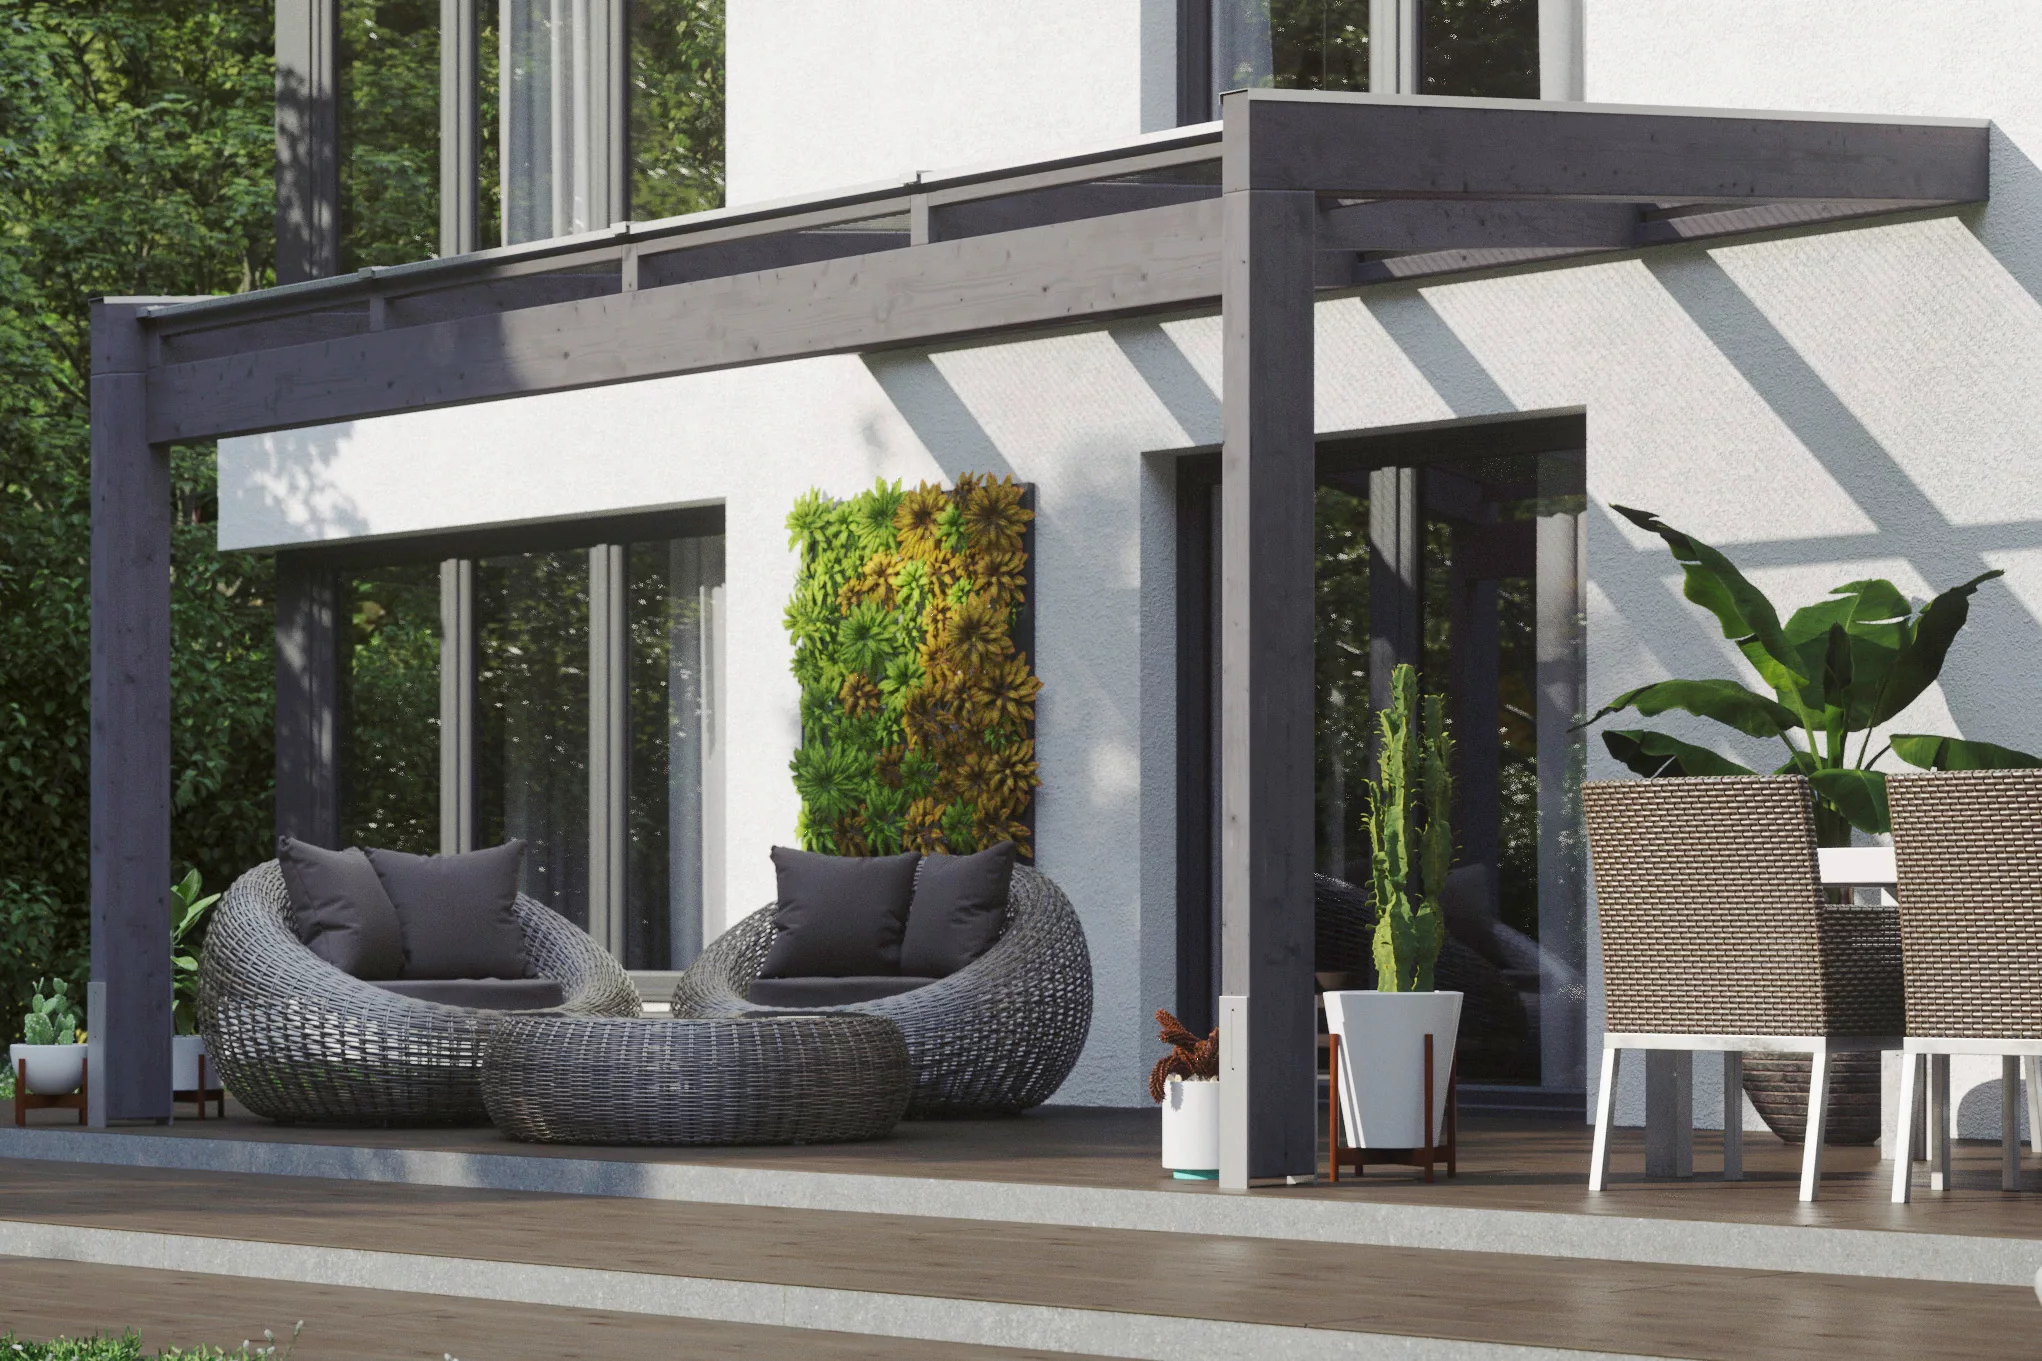 Skan Holz Terrassenüberdachung Novara 450 cm x 359 cm Schiefergrau günstig online kaufen